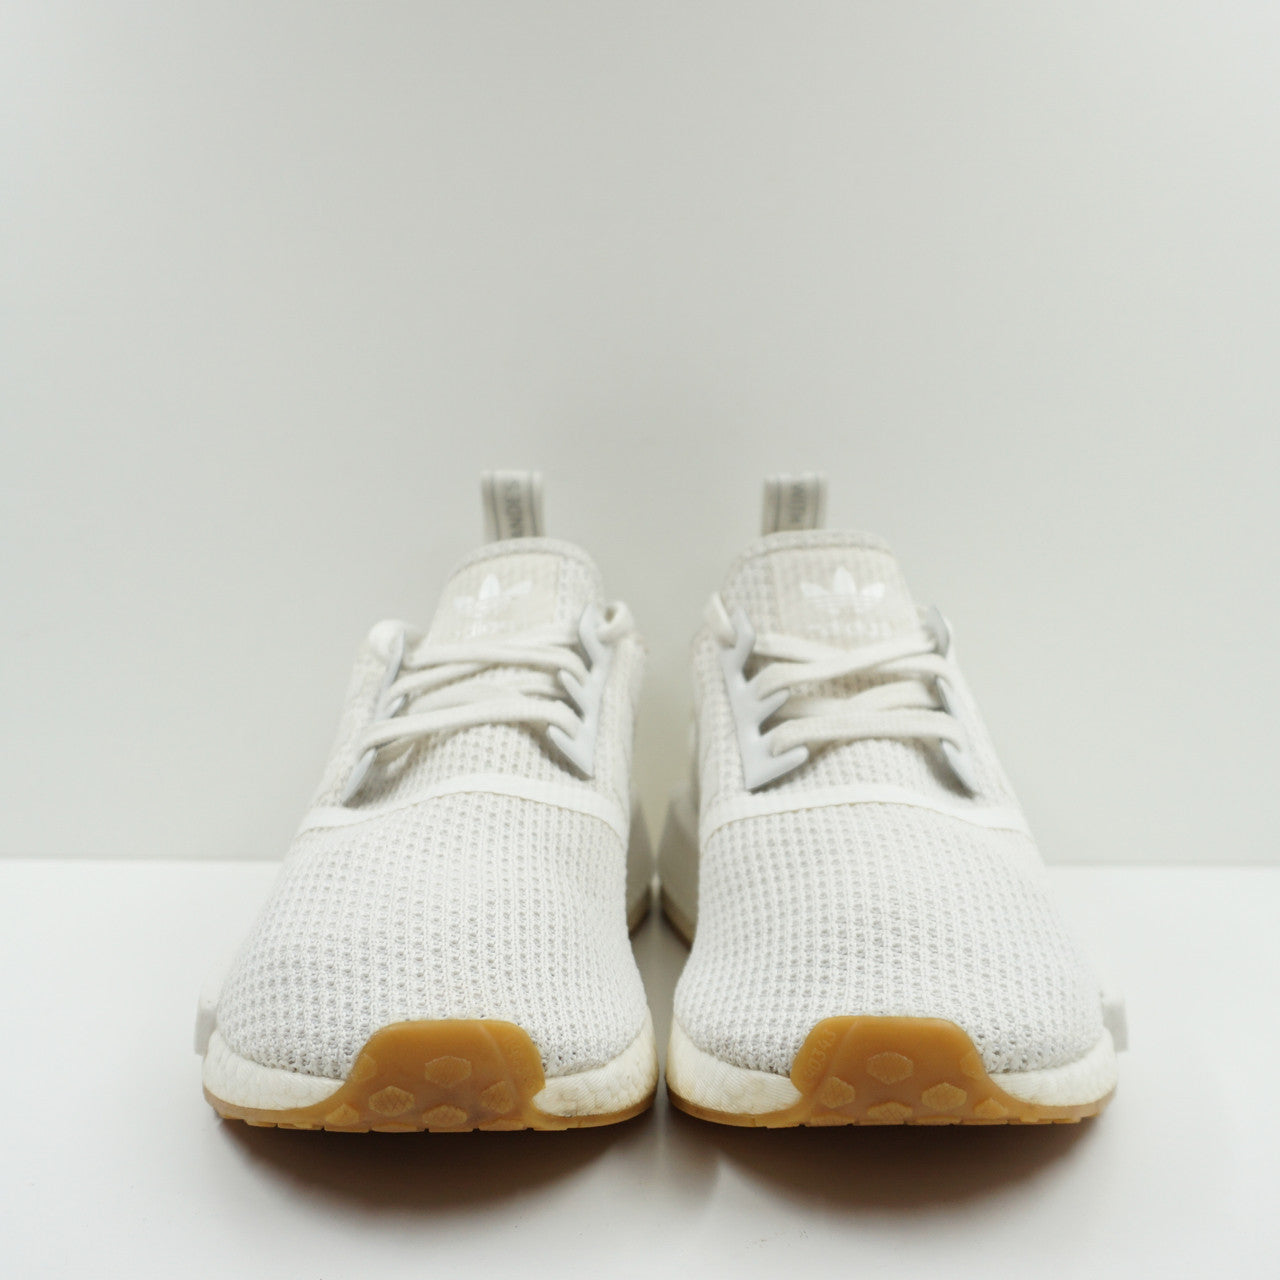 Adidas NMD R1 White Gum (2018/2020)